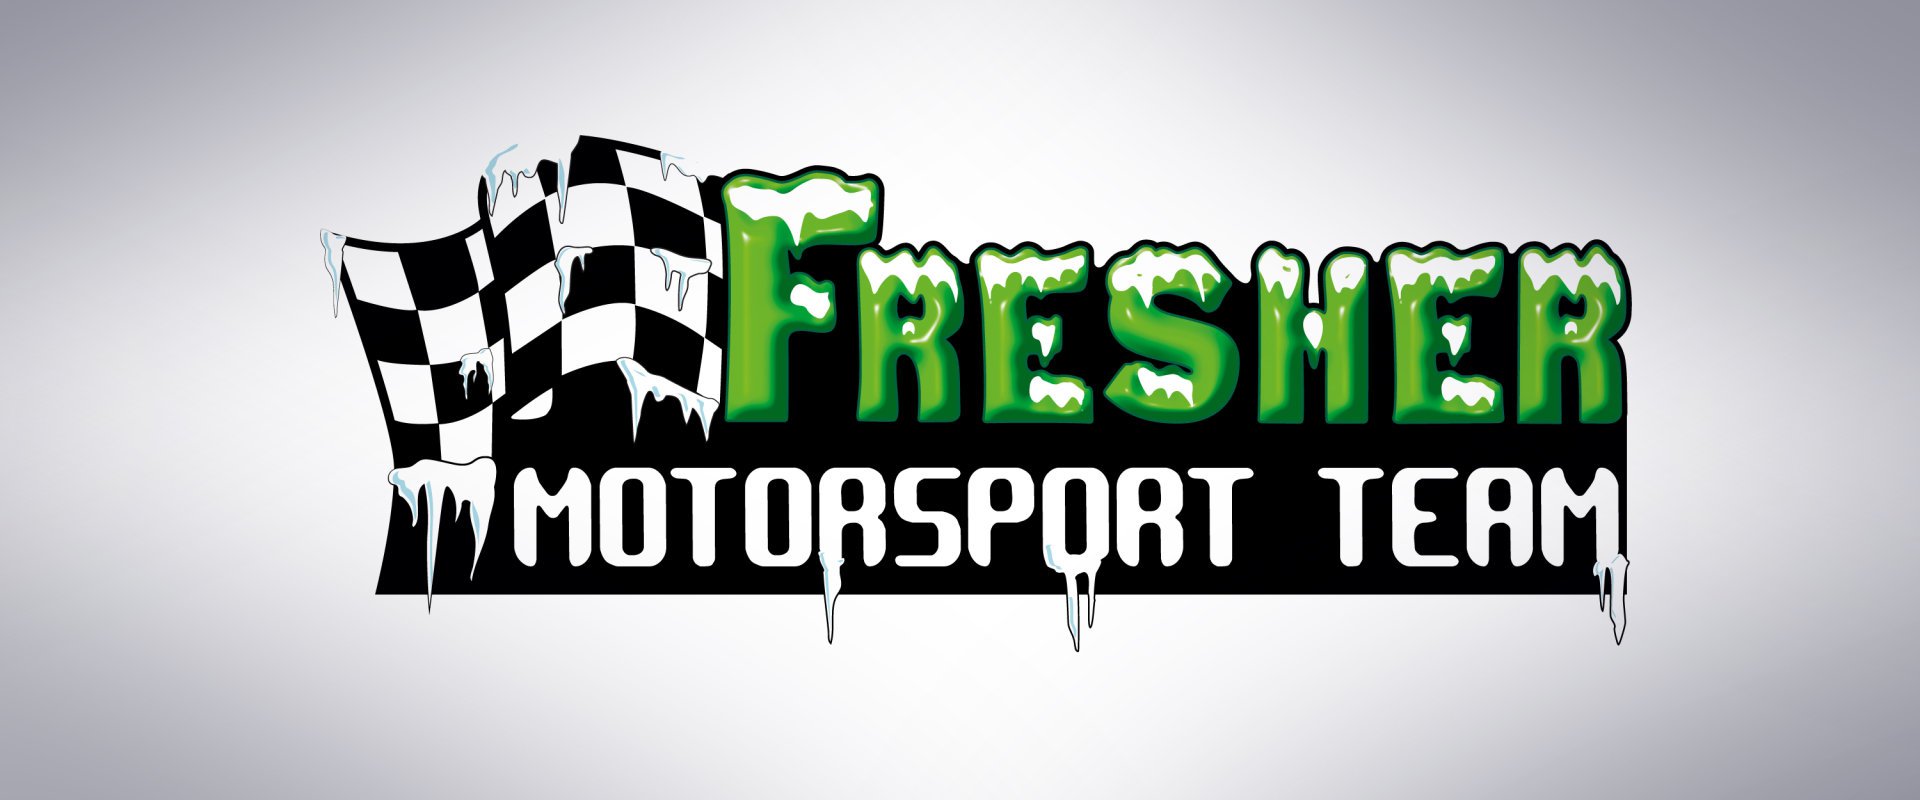 Fresher Motorsport Team #1